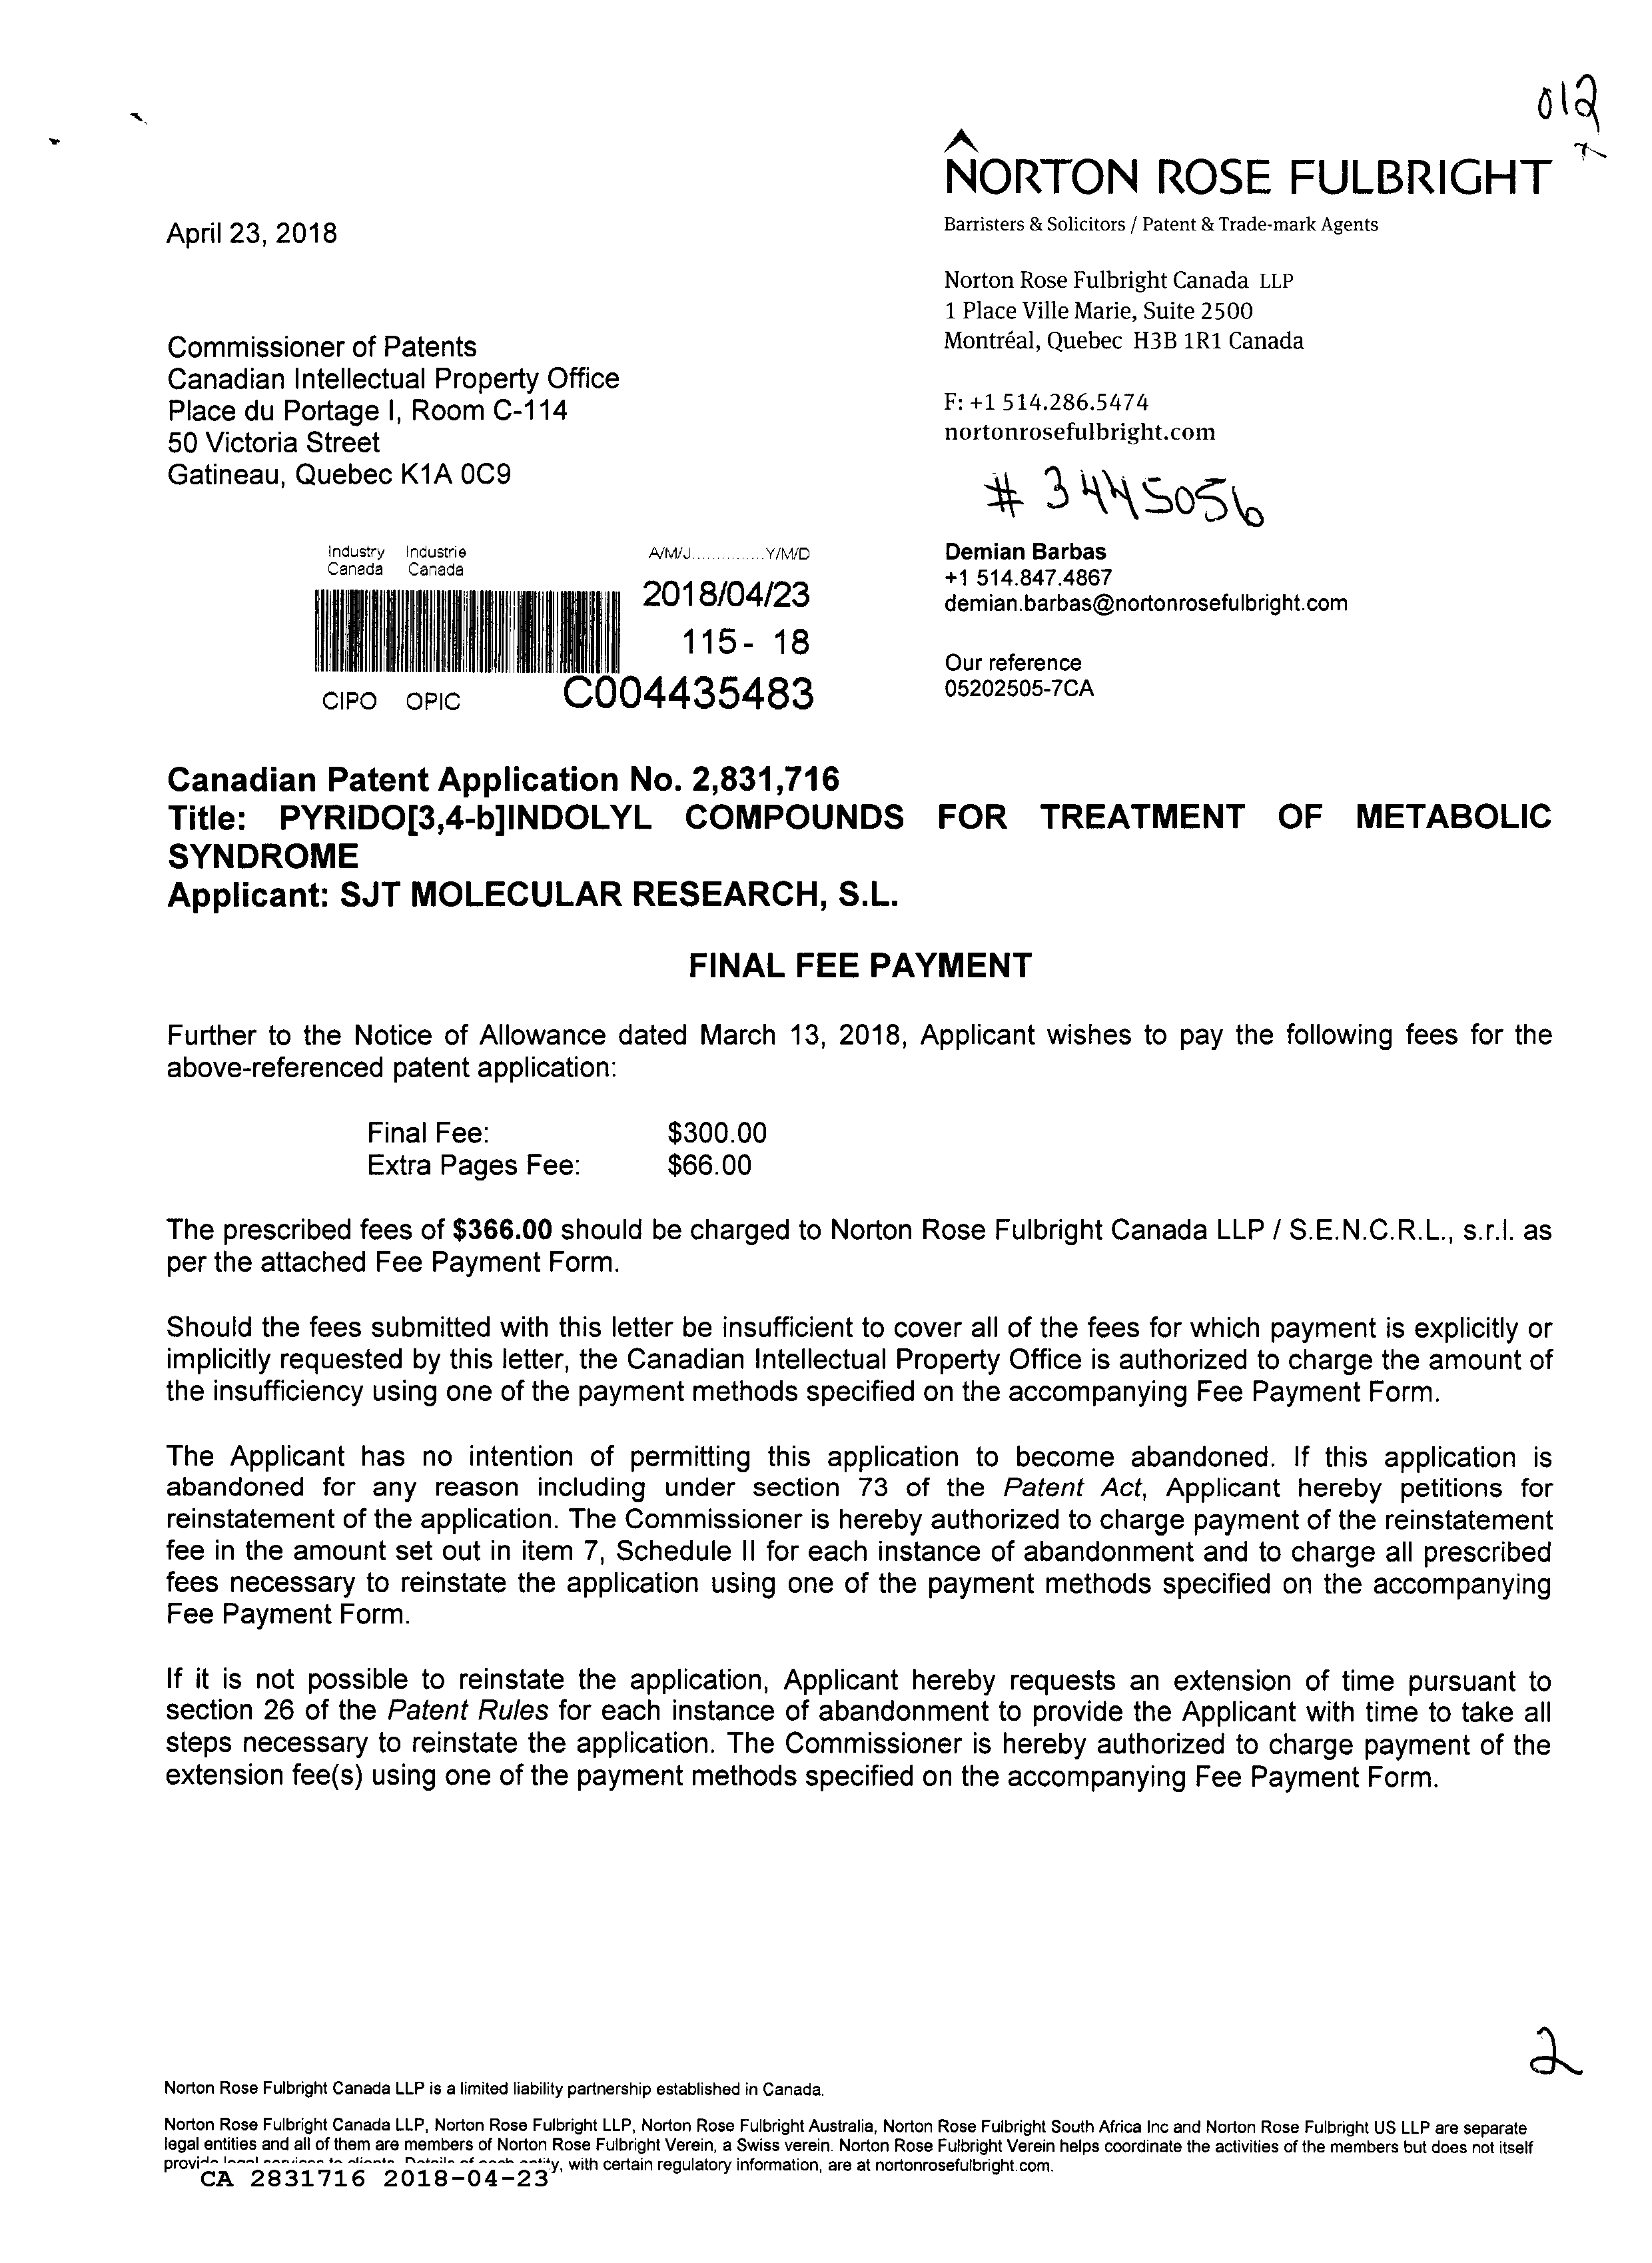 Canadian Patent Document 2831716. Correspondence 20171223. Image 1 of 2